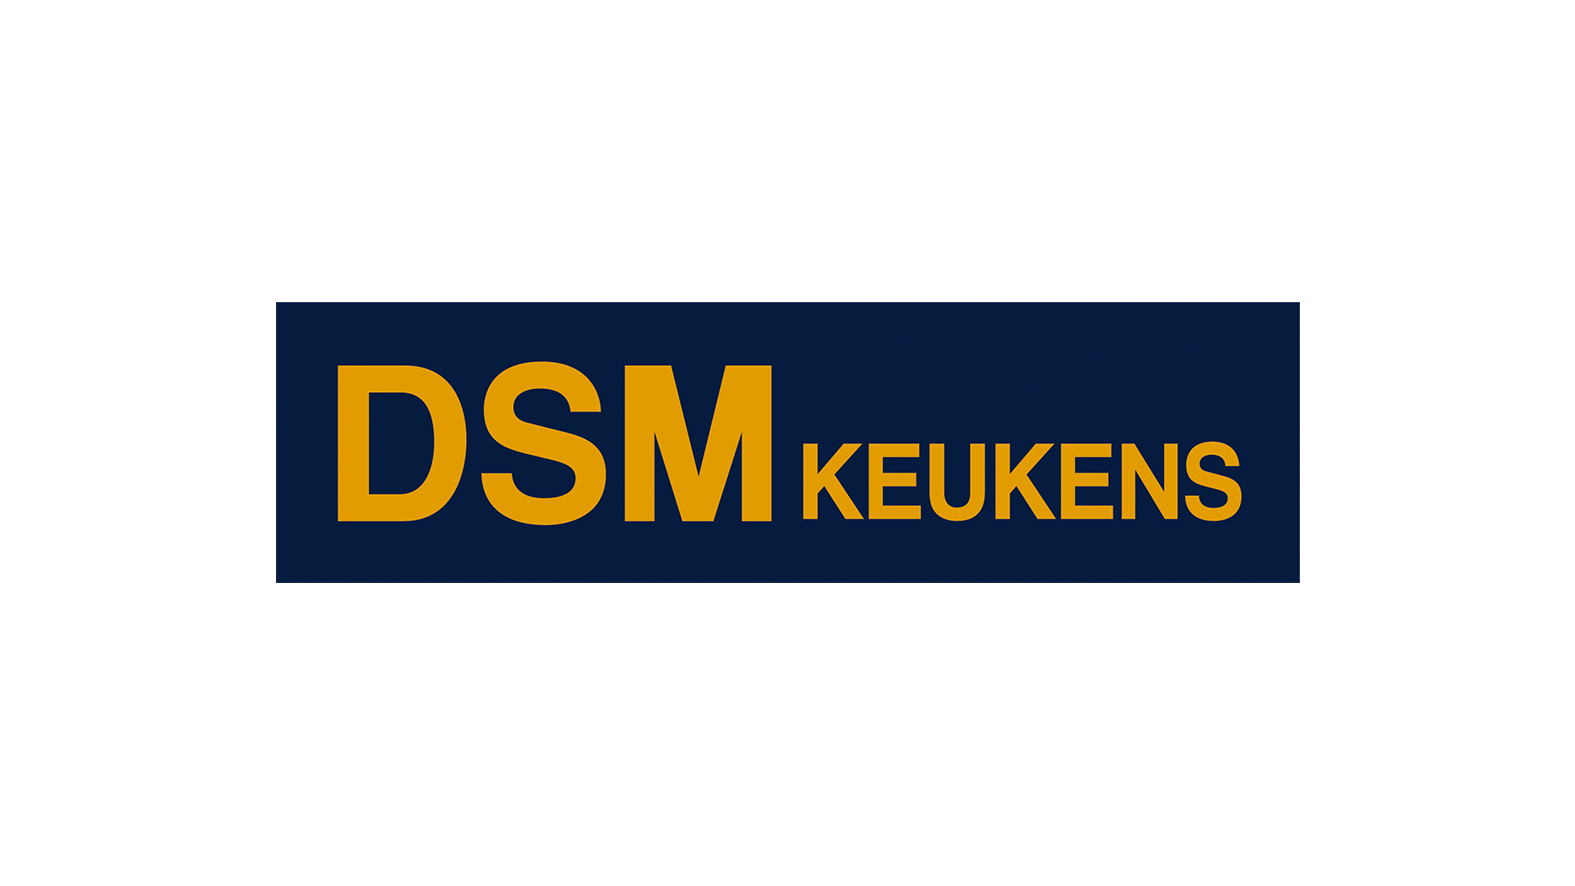 DSM Keukens